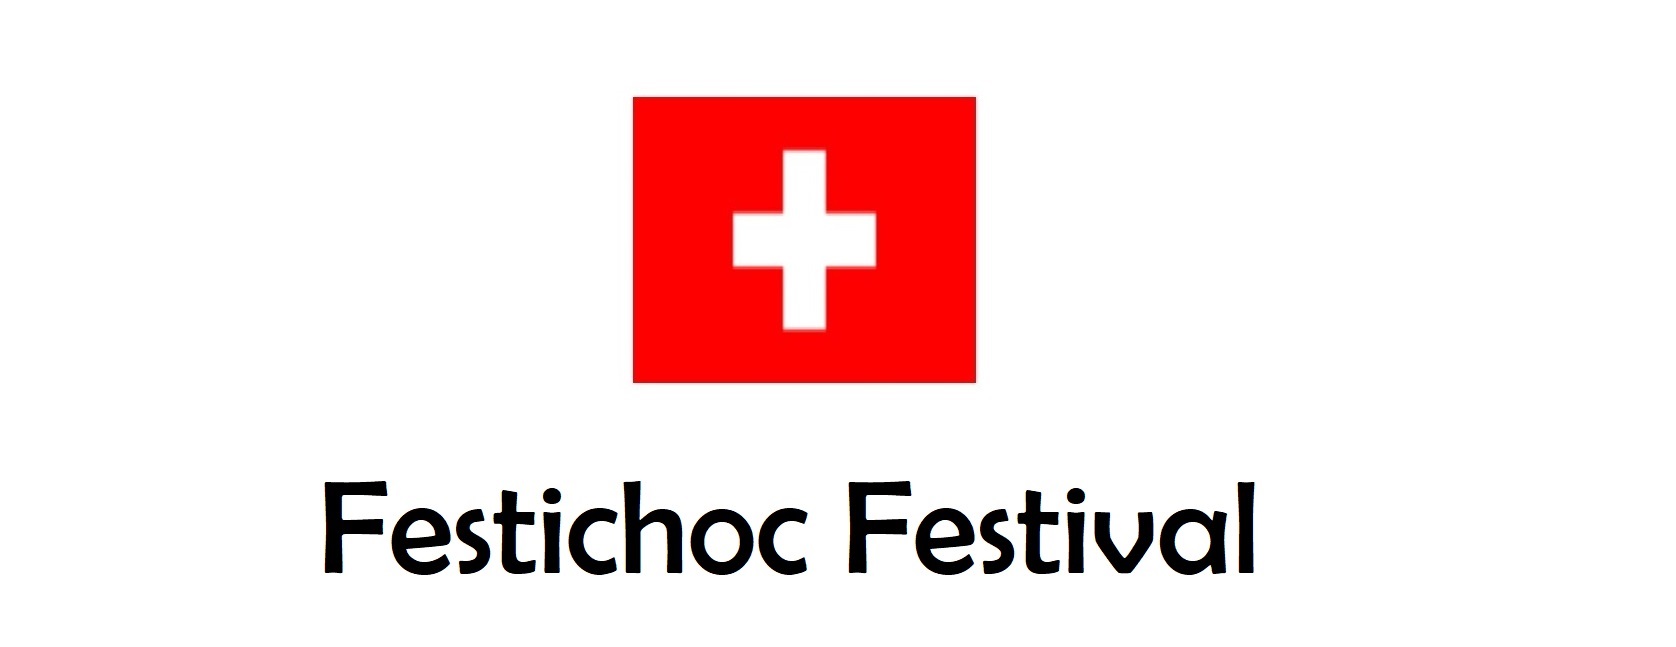 Festichoc Festival, Switzerland